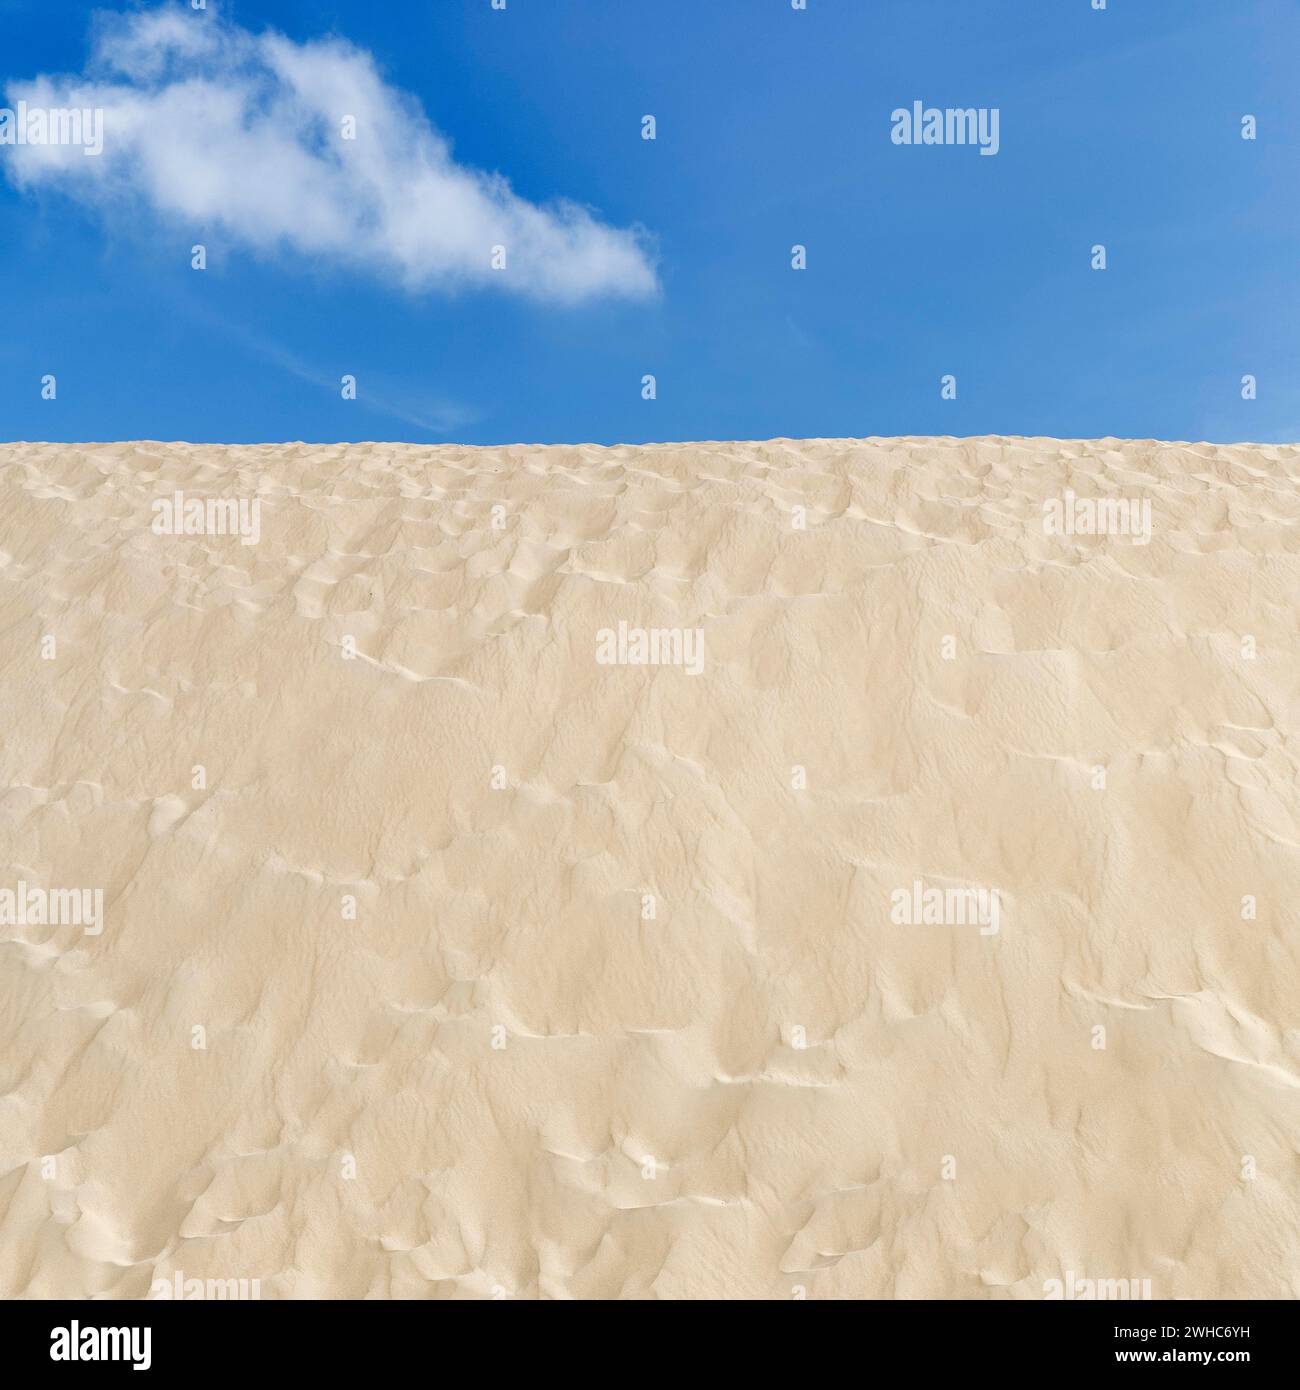 Empty dune, shifting dune, fine sand, spring clouds, minimalist landscape, symbolic image, coastline, Valdevaqueros, Tarifa, Spain Stock Photo